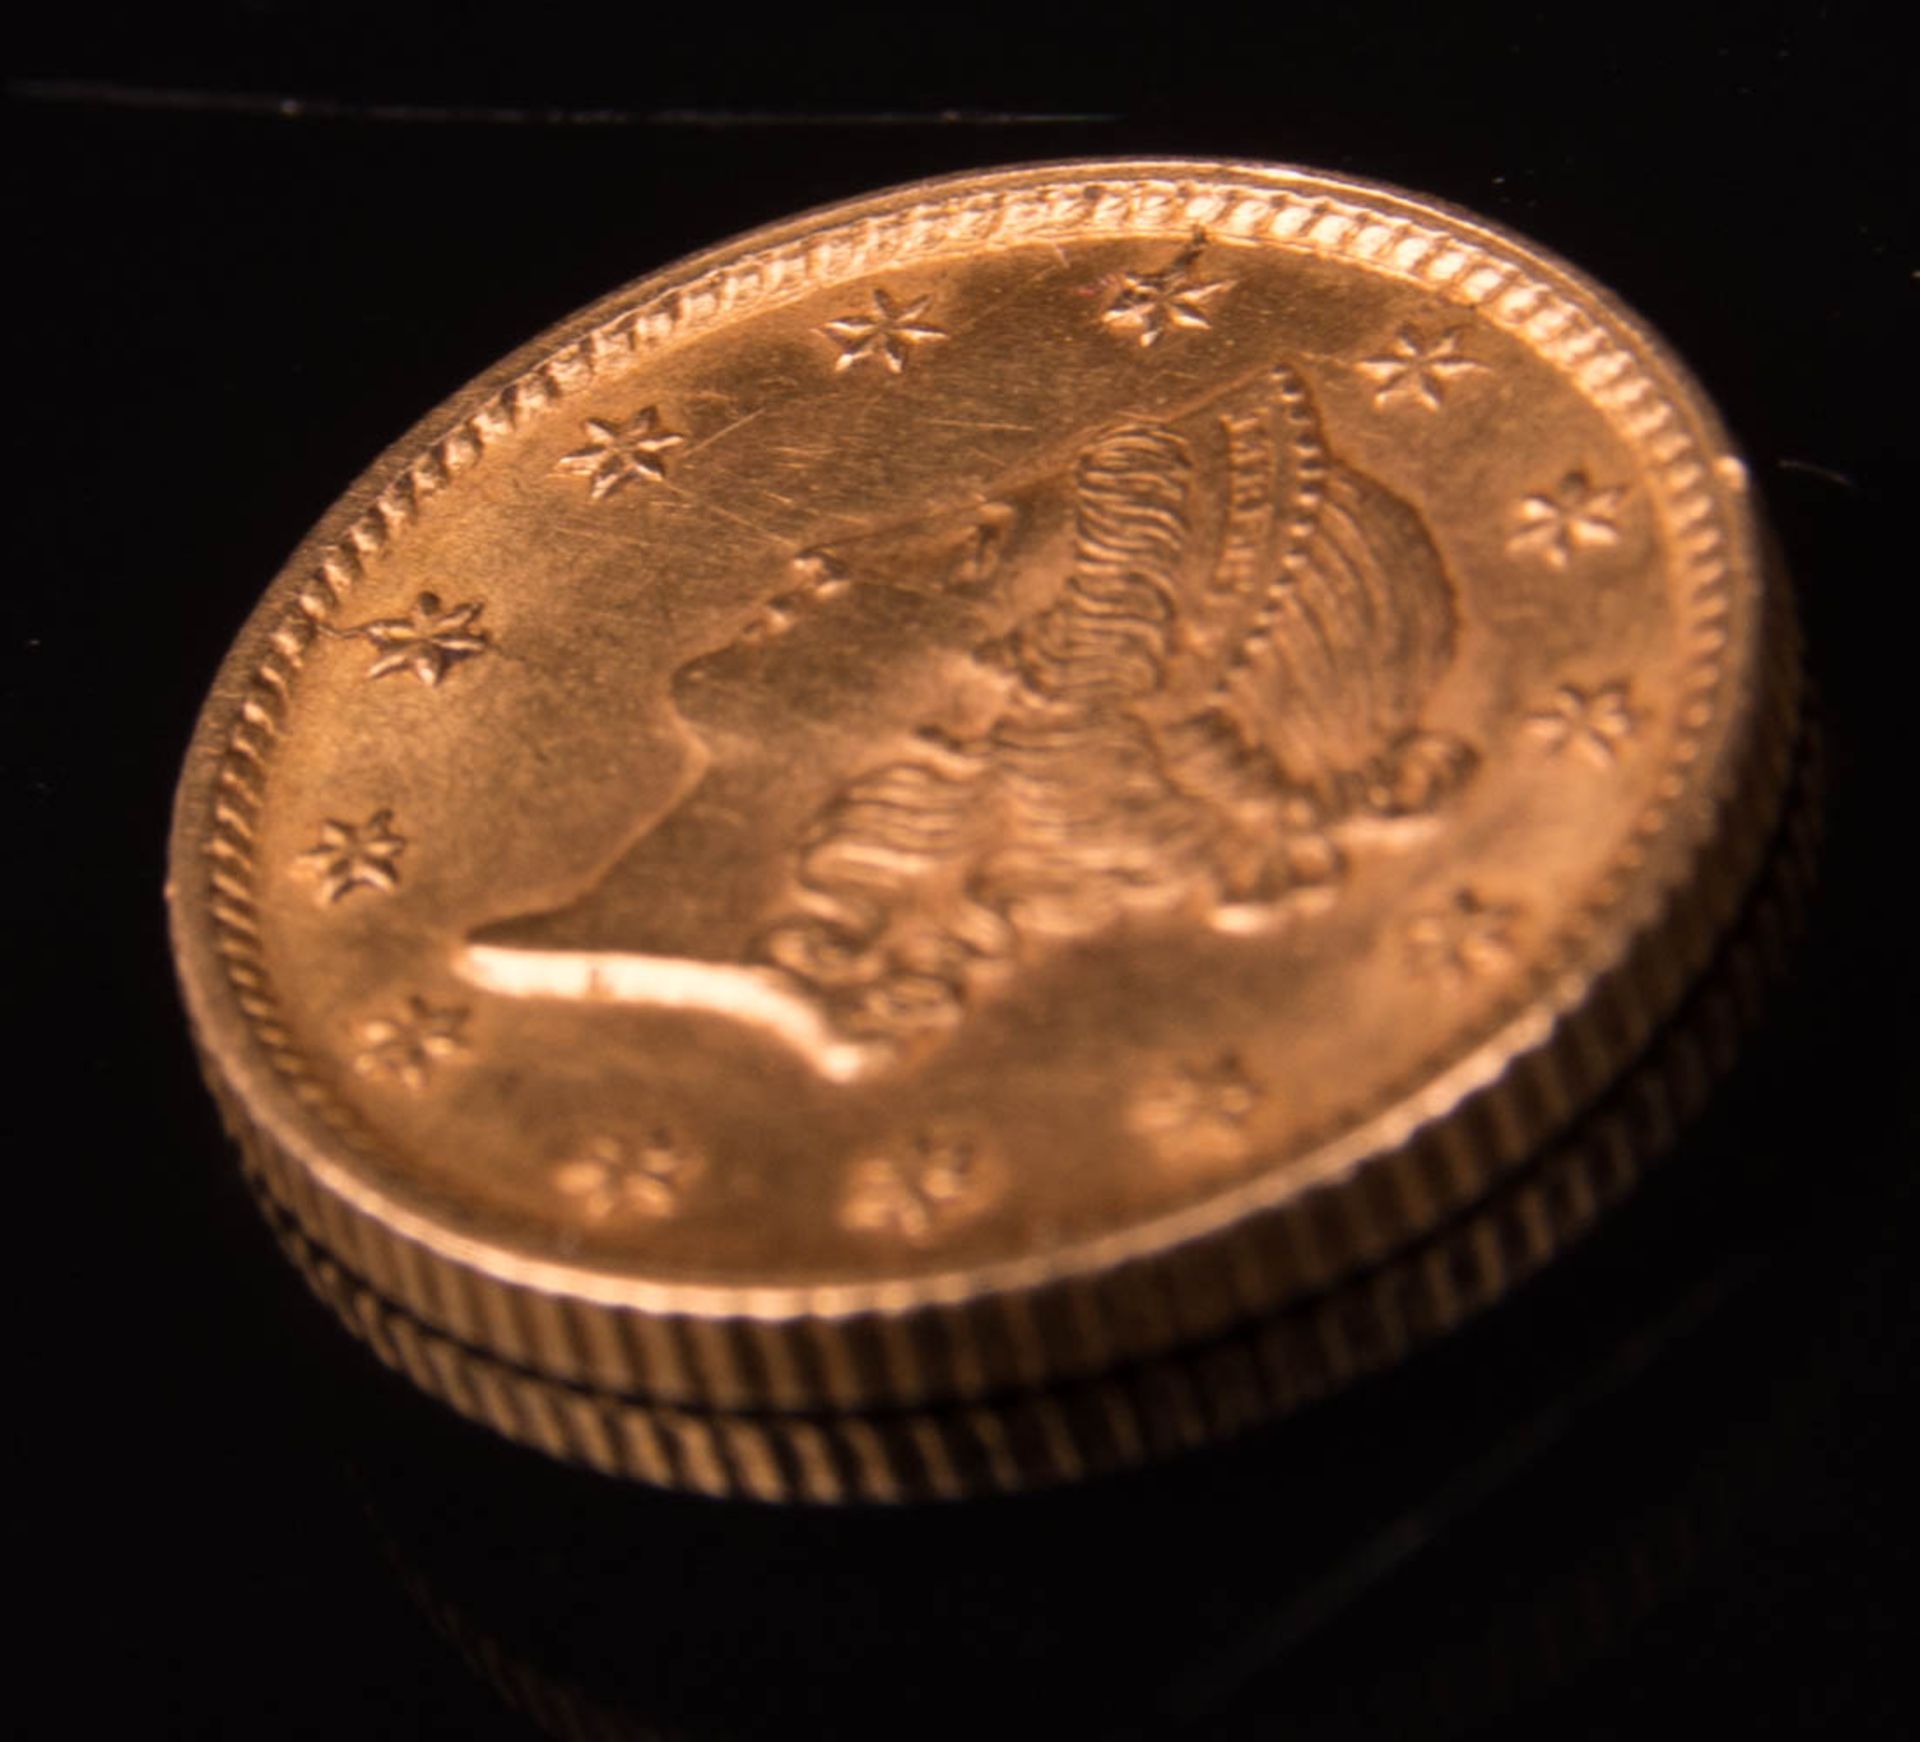 Goldmünze USA, Liberty Head, 1 Dollar 1854. - Bild 4 aus 5